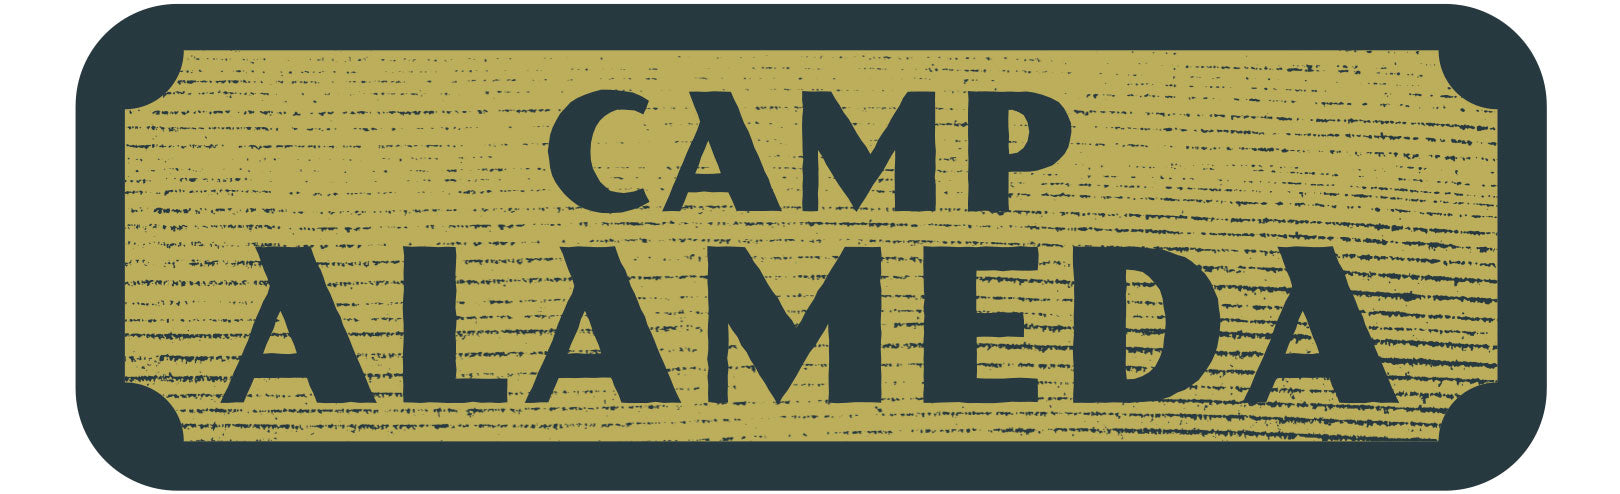 Camp Alameda